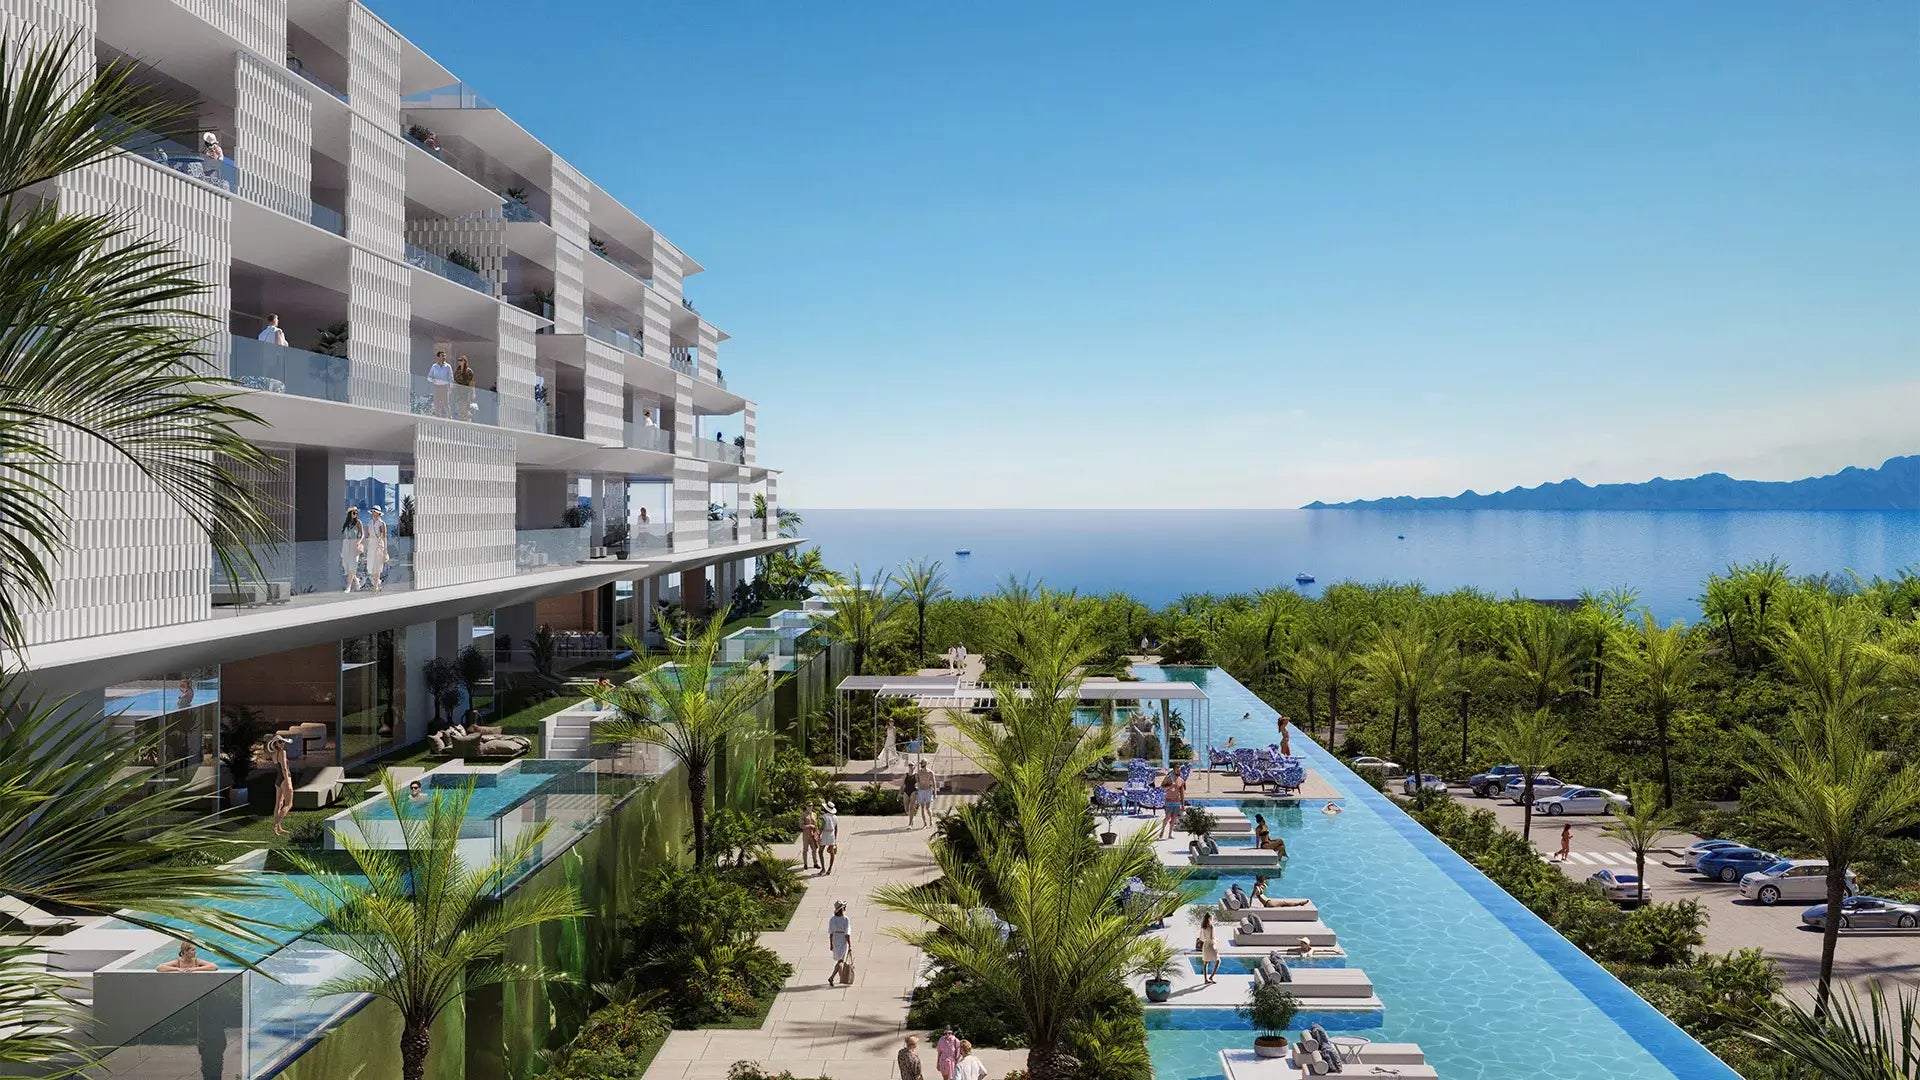 Design Hills Marbella: The latest Real Estate venture endorsed by Dolce&Gabbana